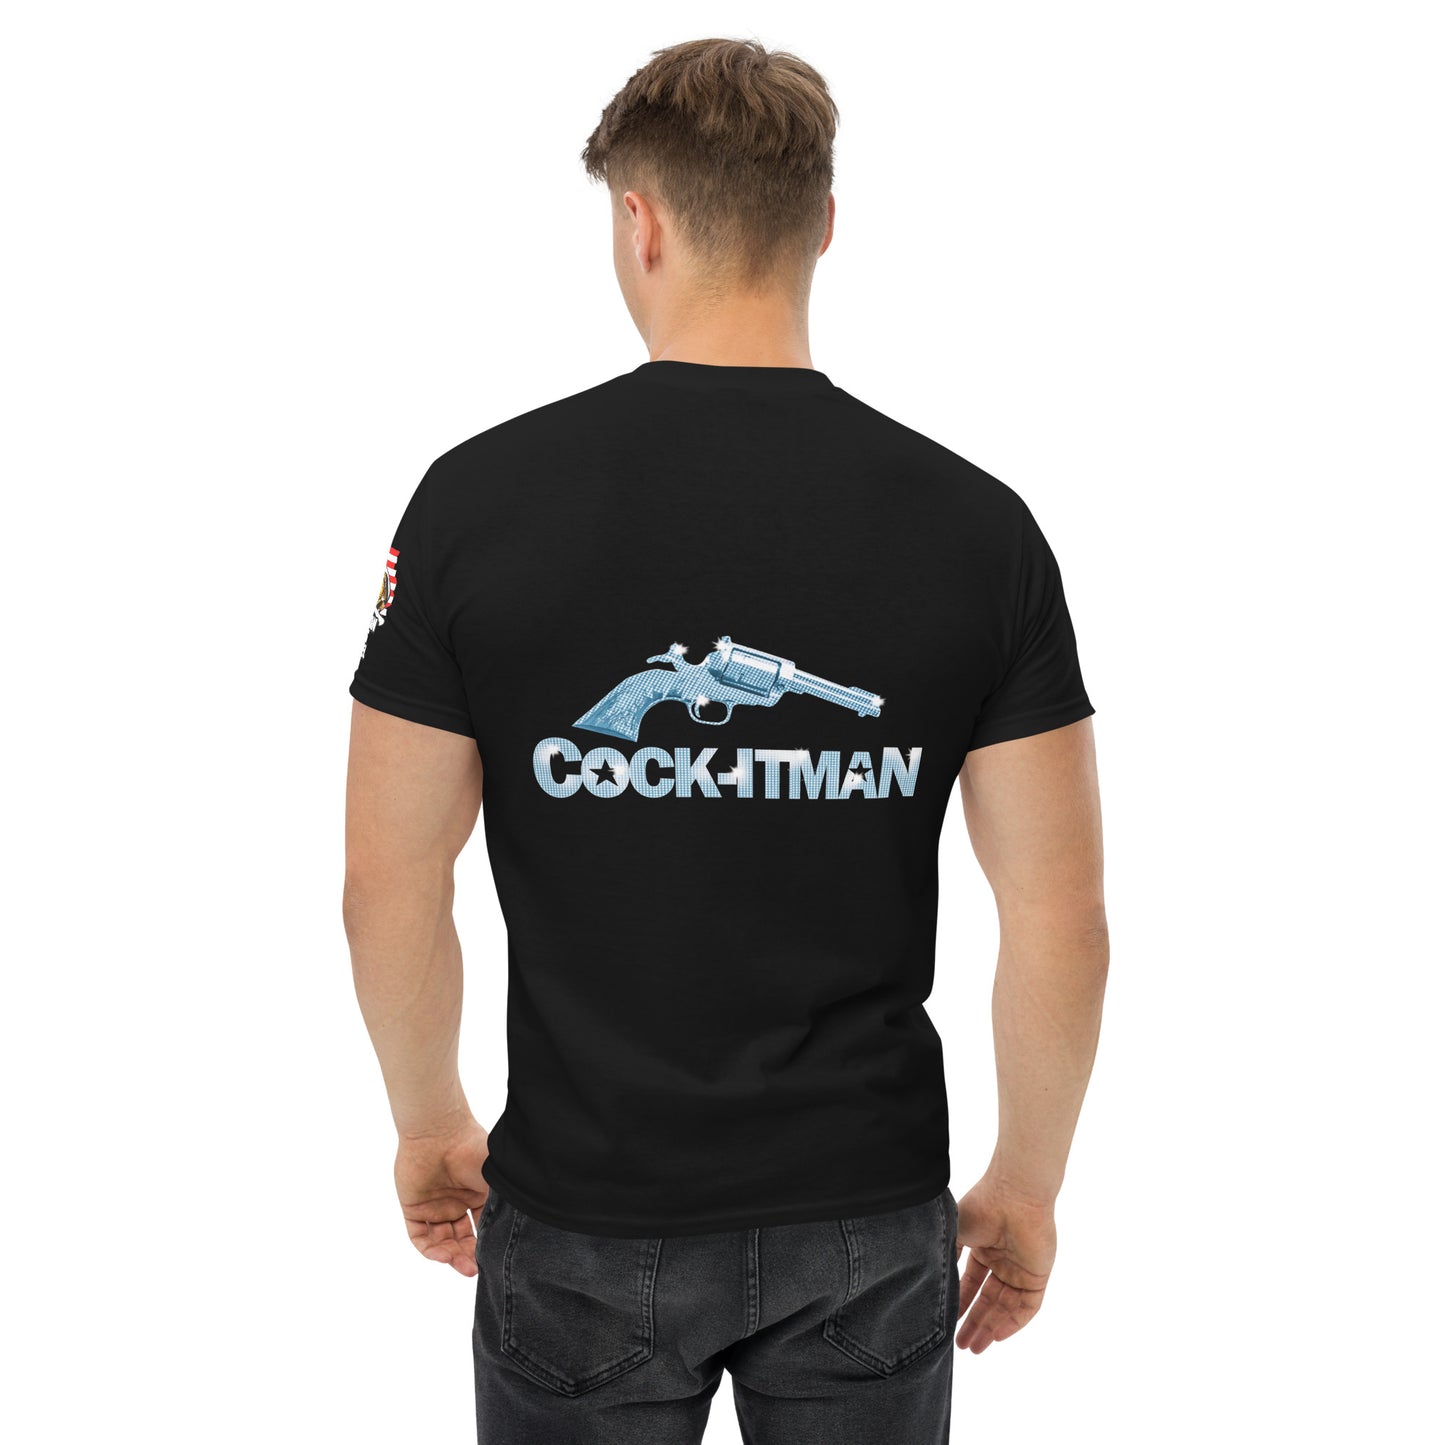 Cockitman- Rocketman Parody